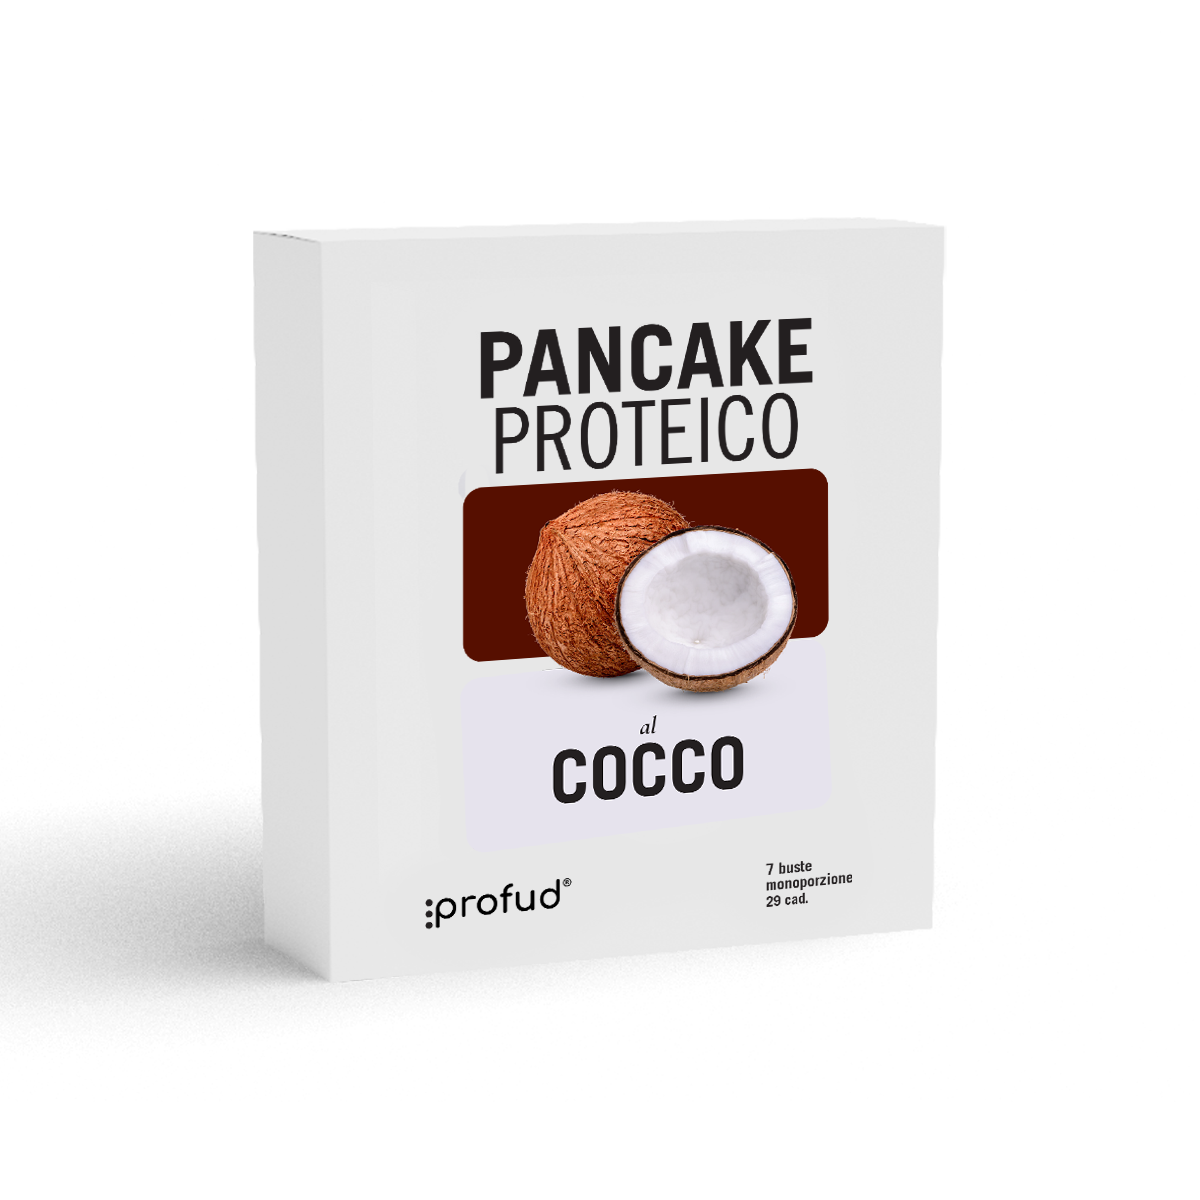 pancake proteico cocco profud